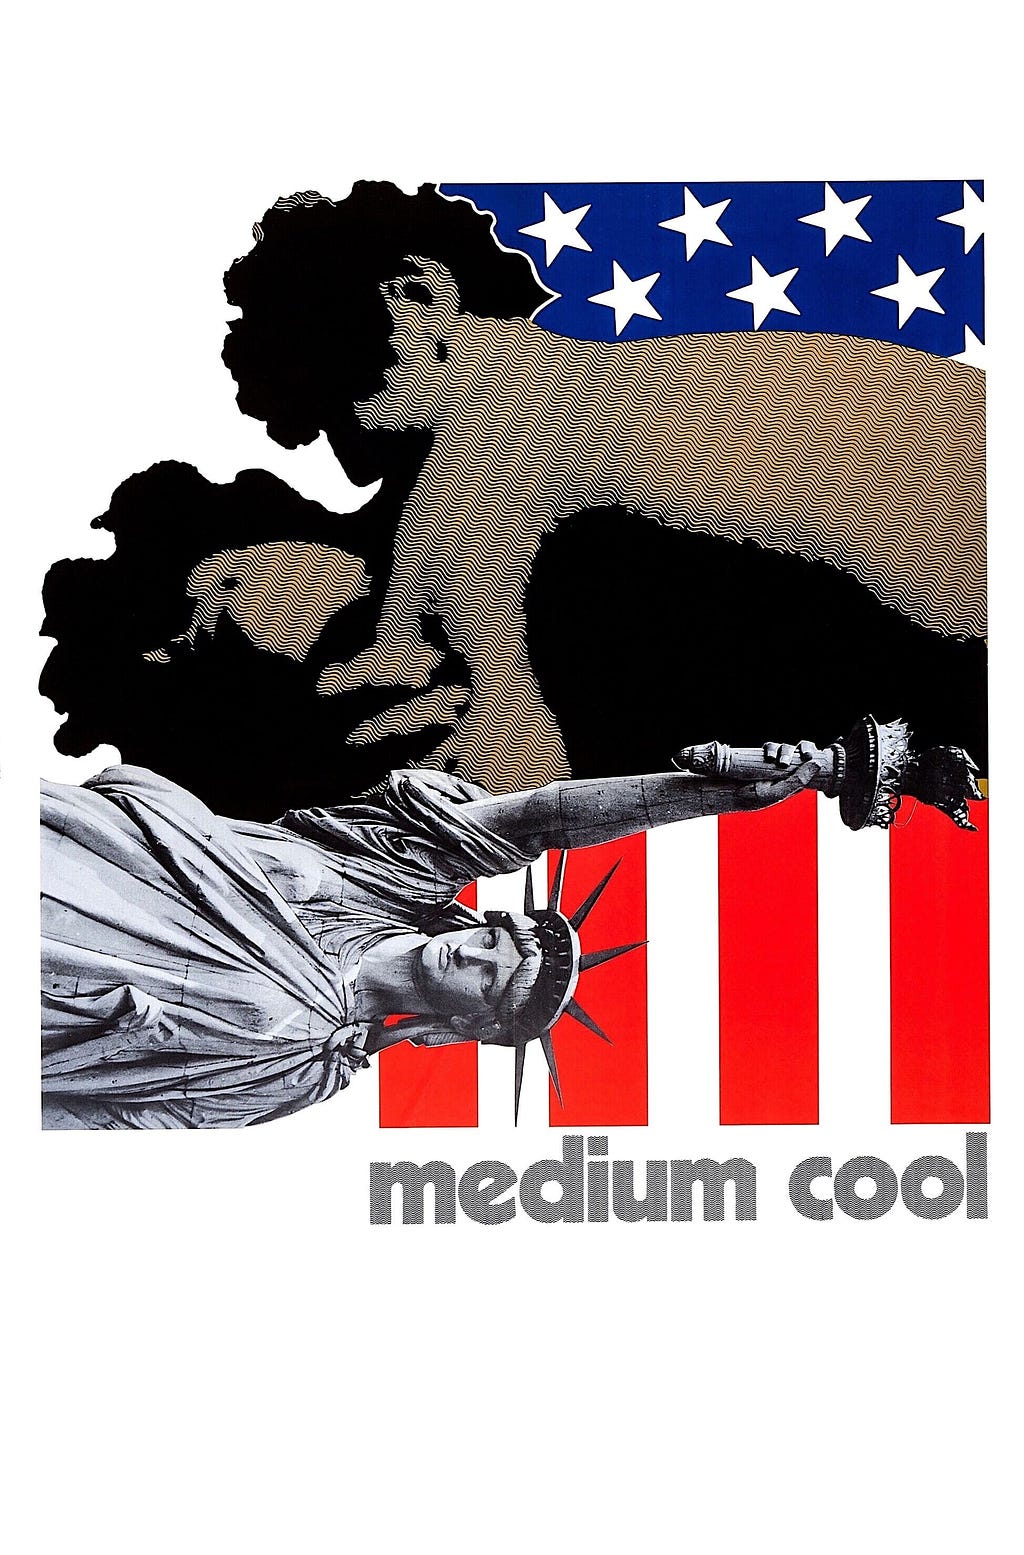 Medium Cool (1969) | Poster